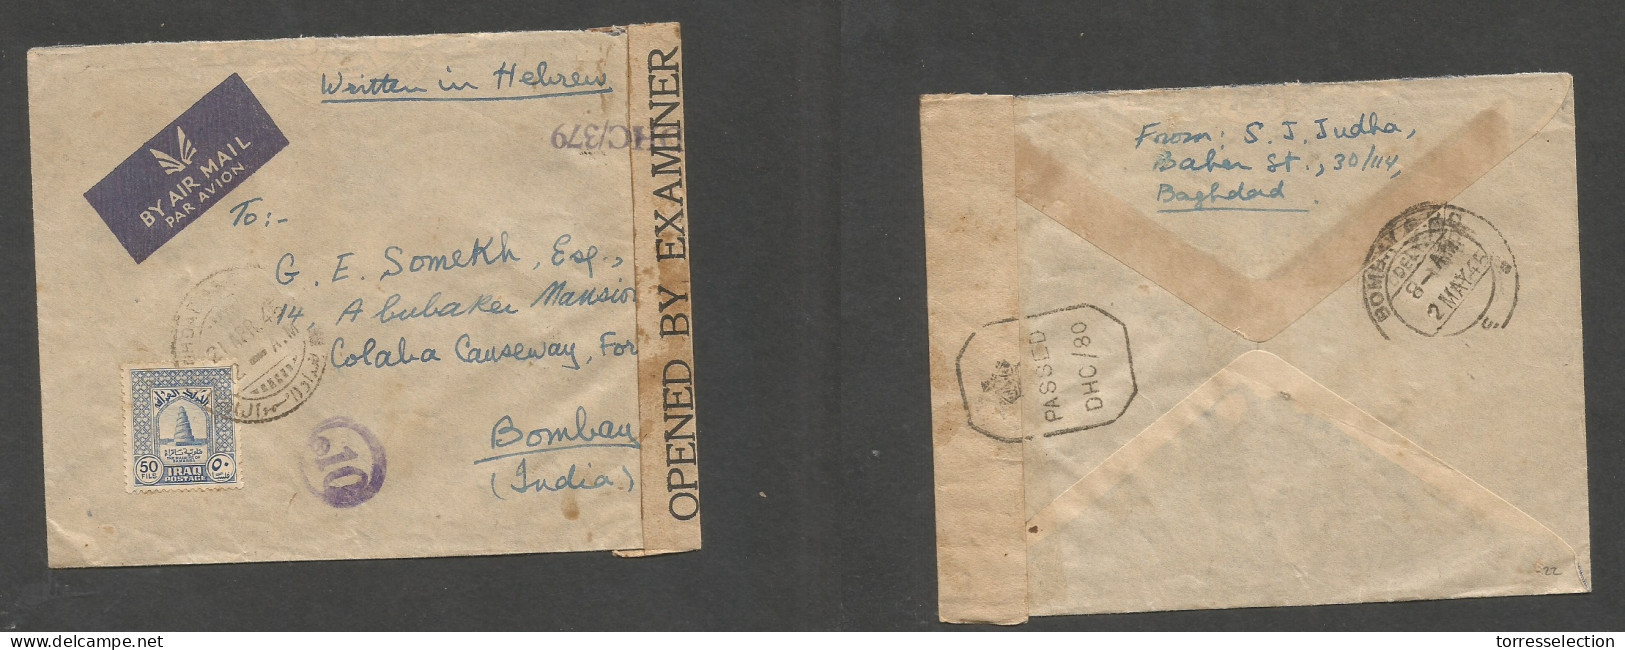 IRAQ. 1945 (21 Apr) Baghdad - India, Bombay (2 May) WWII Censored Single 50 Fils Fkd Envelope Hebrew Written. Arrival Ca - Irak